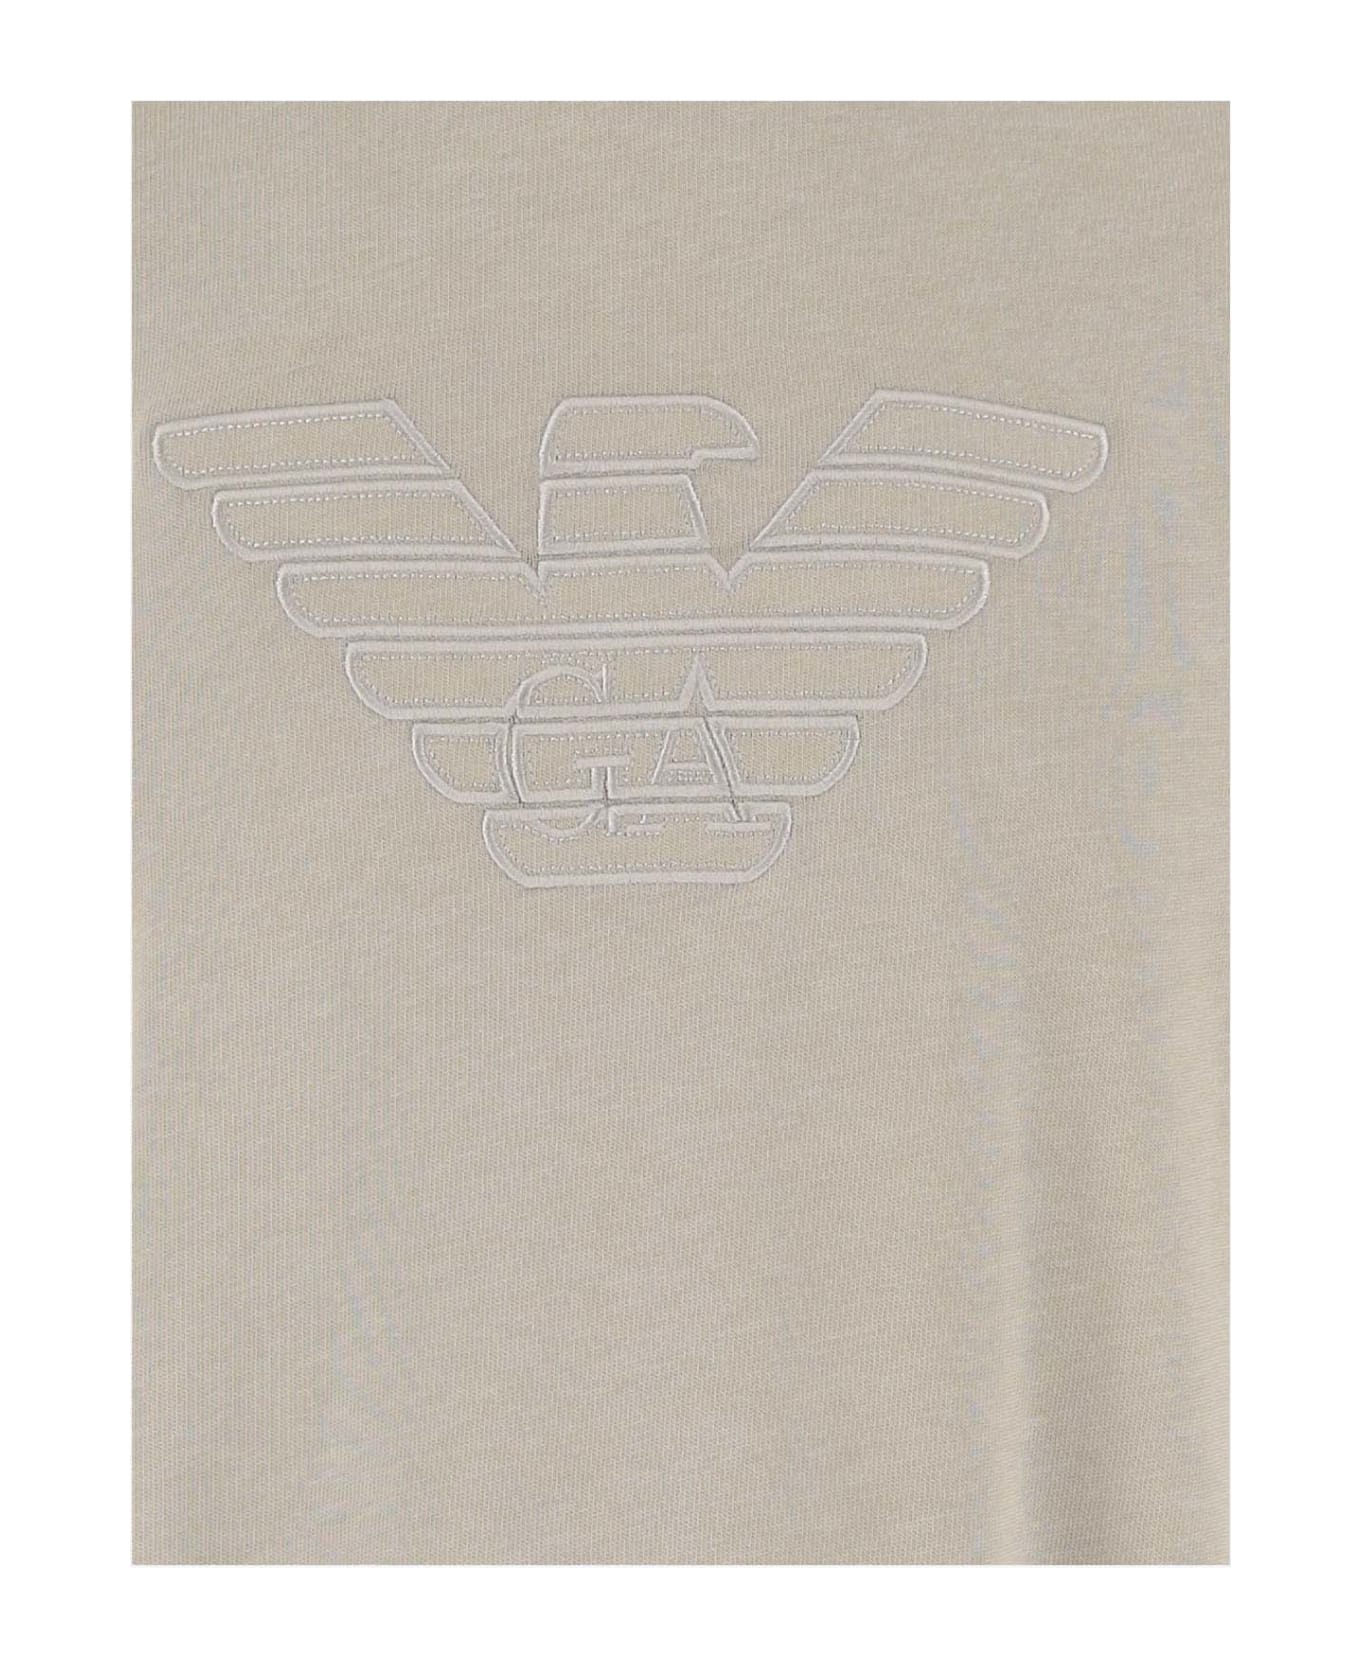 Emporio Armani Cotton T-shirt With Logo - Beige シャツ